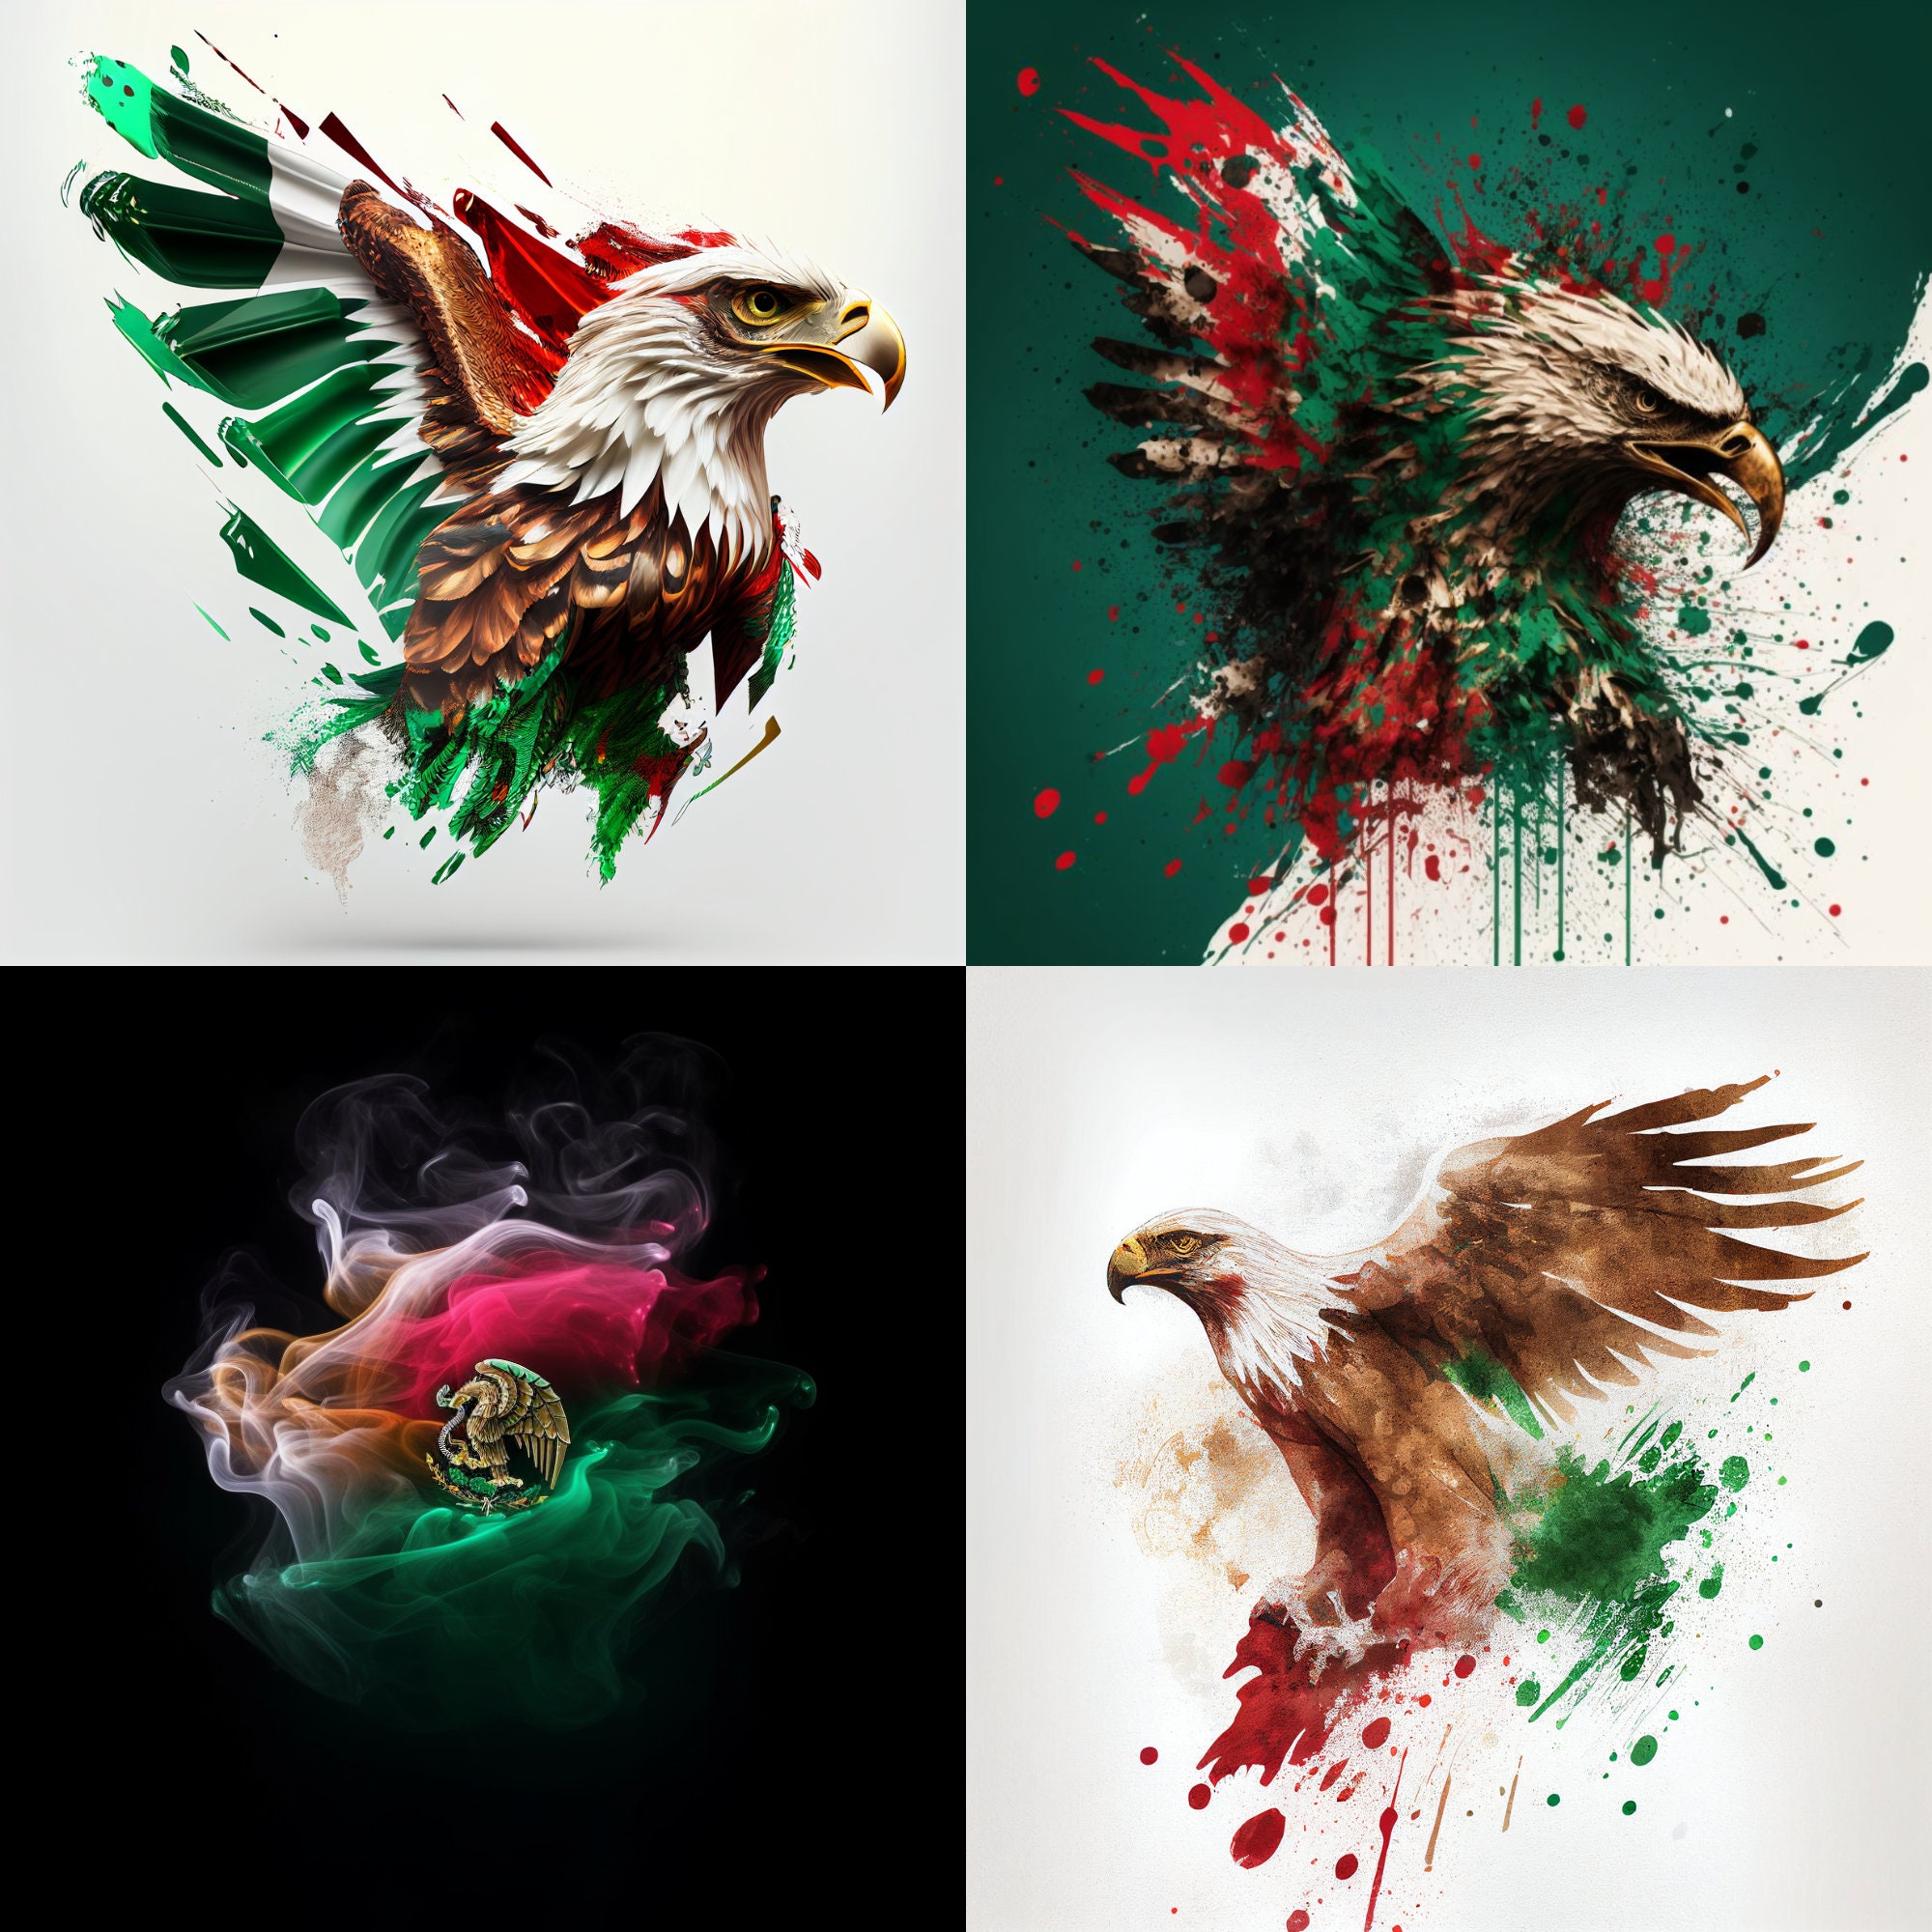 Trendy Apparel Shop Hecho En Mexico Kids 3D Eagle Embroidered Logo Fla